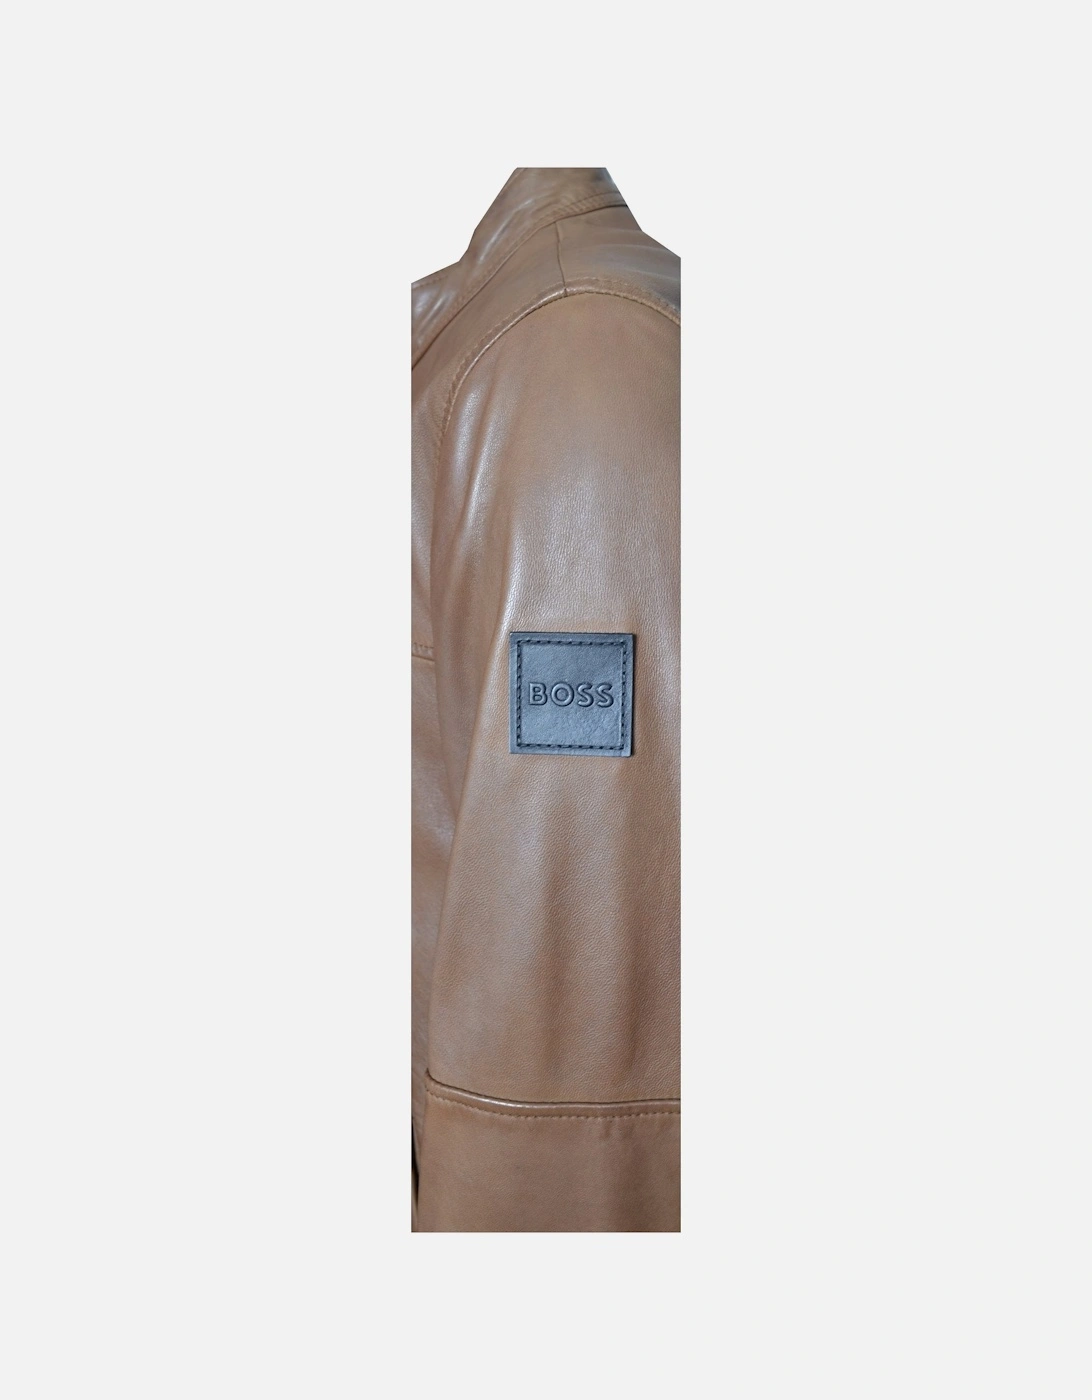 Men's Medium Brown Josep2 Leather Jacket.